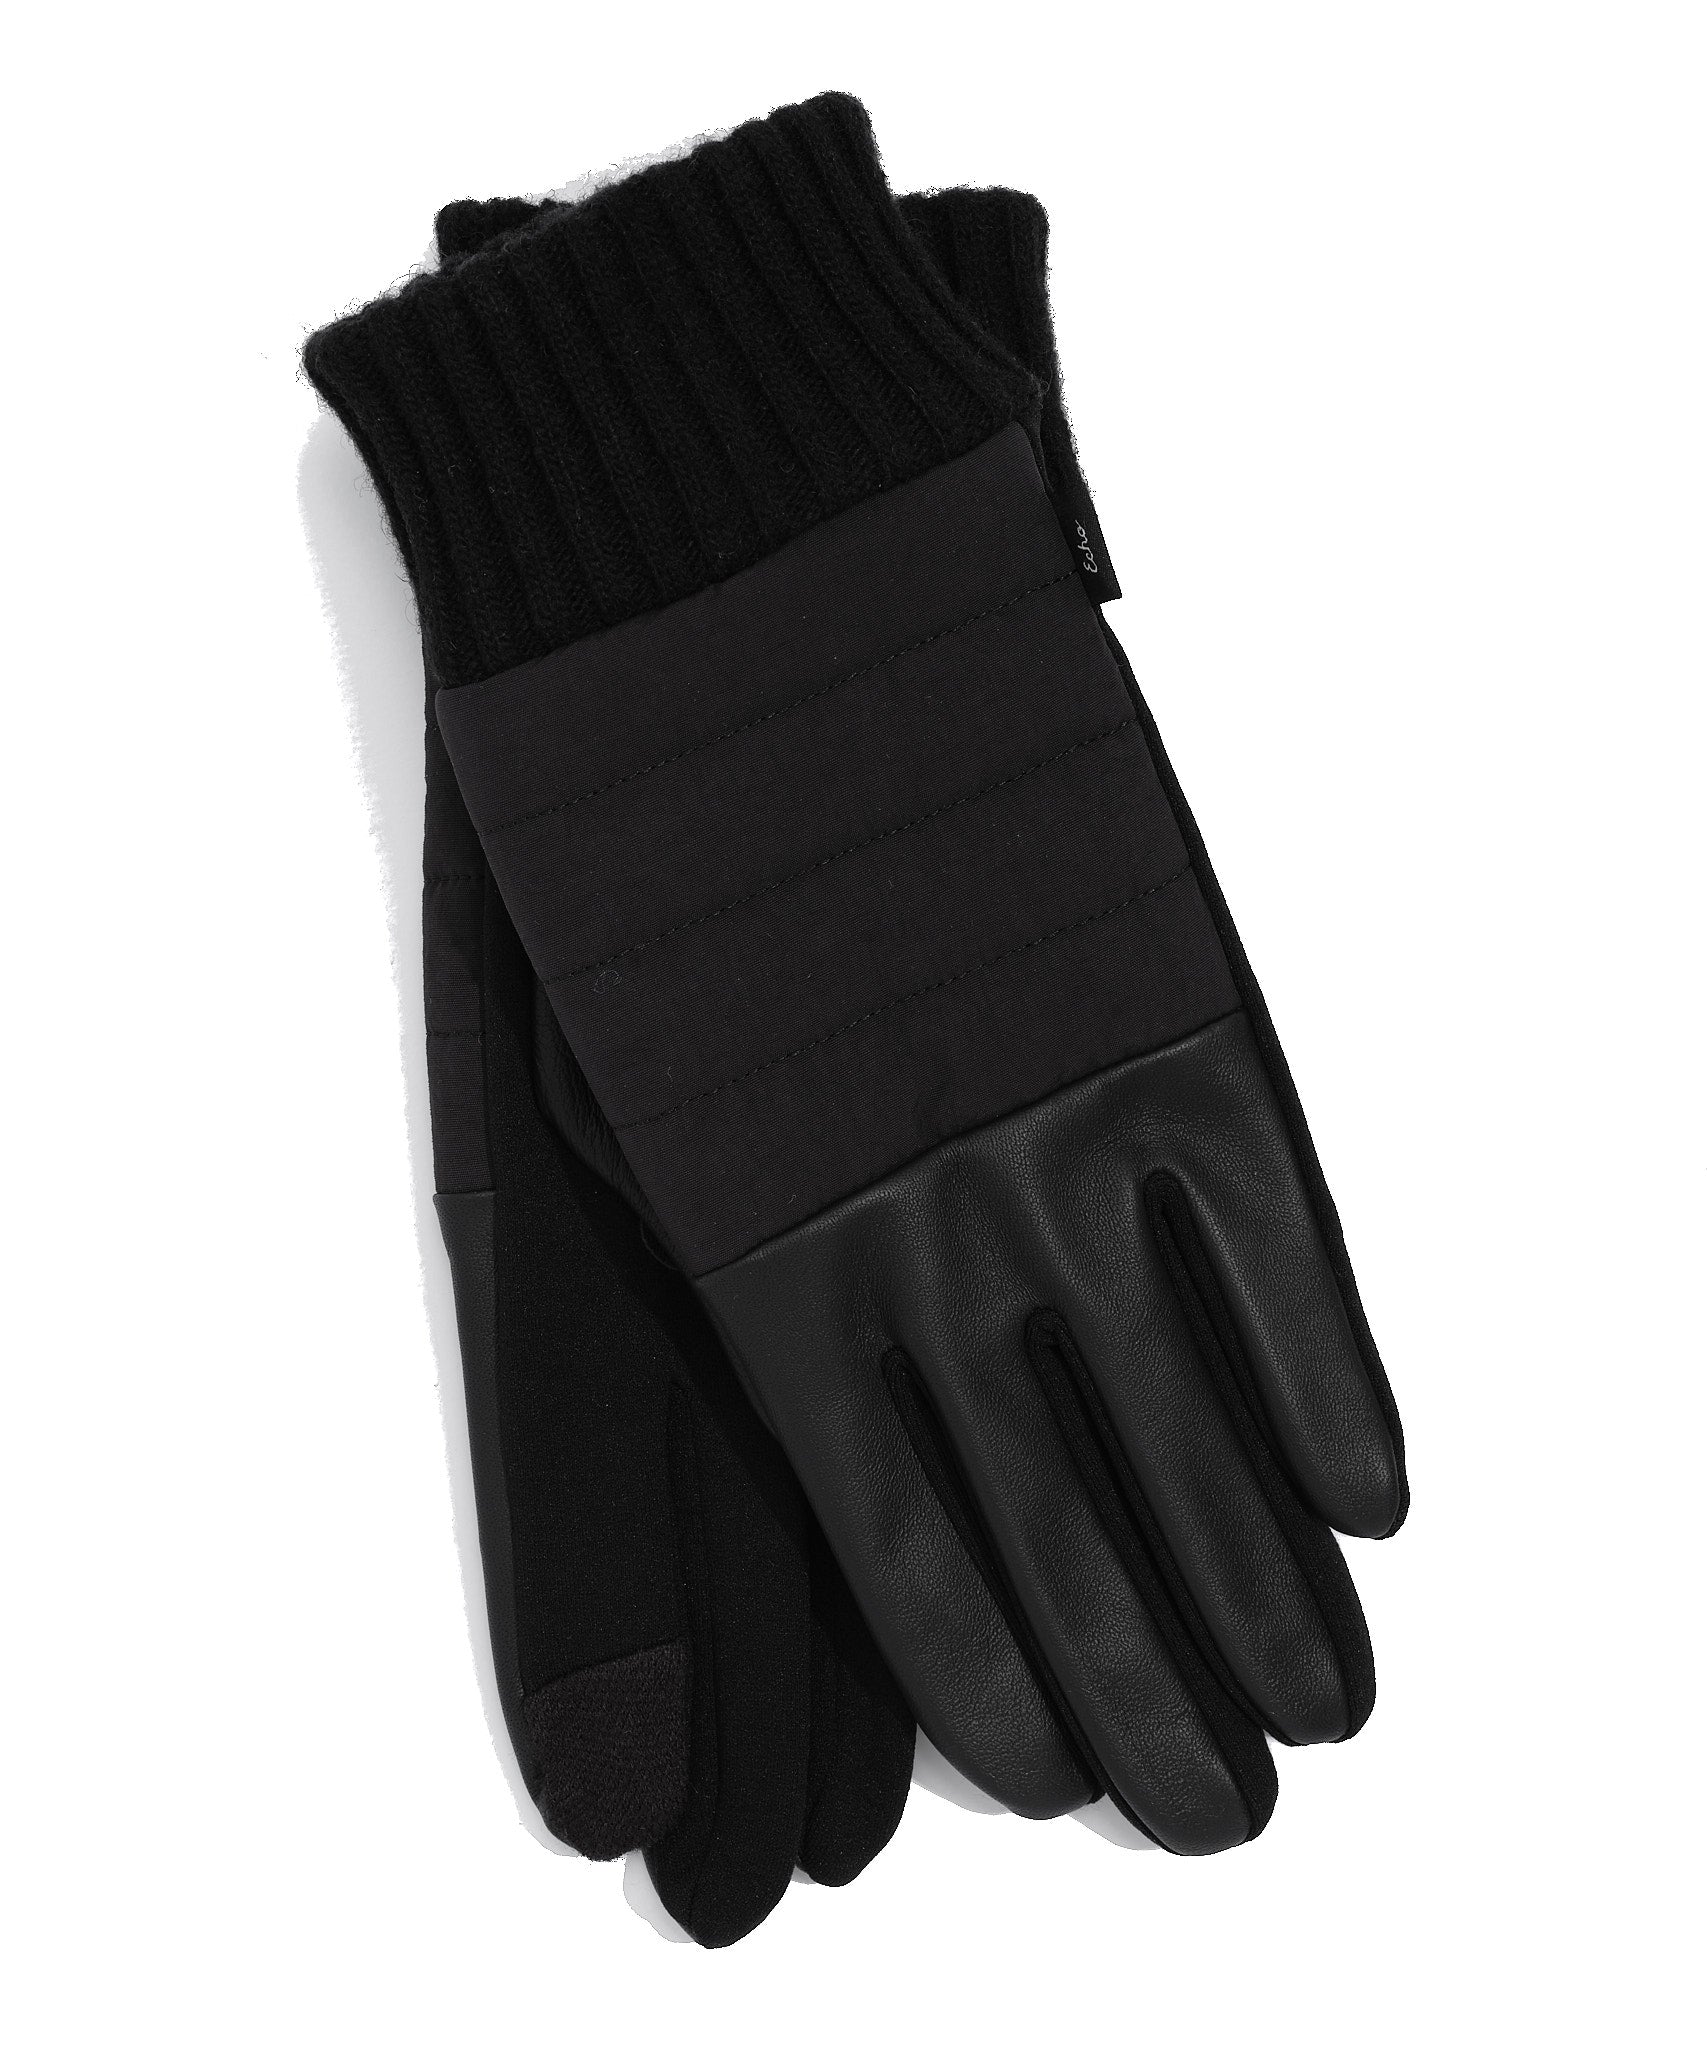 Cloud Hybrid Glove in color Black